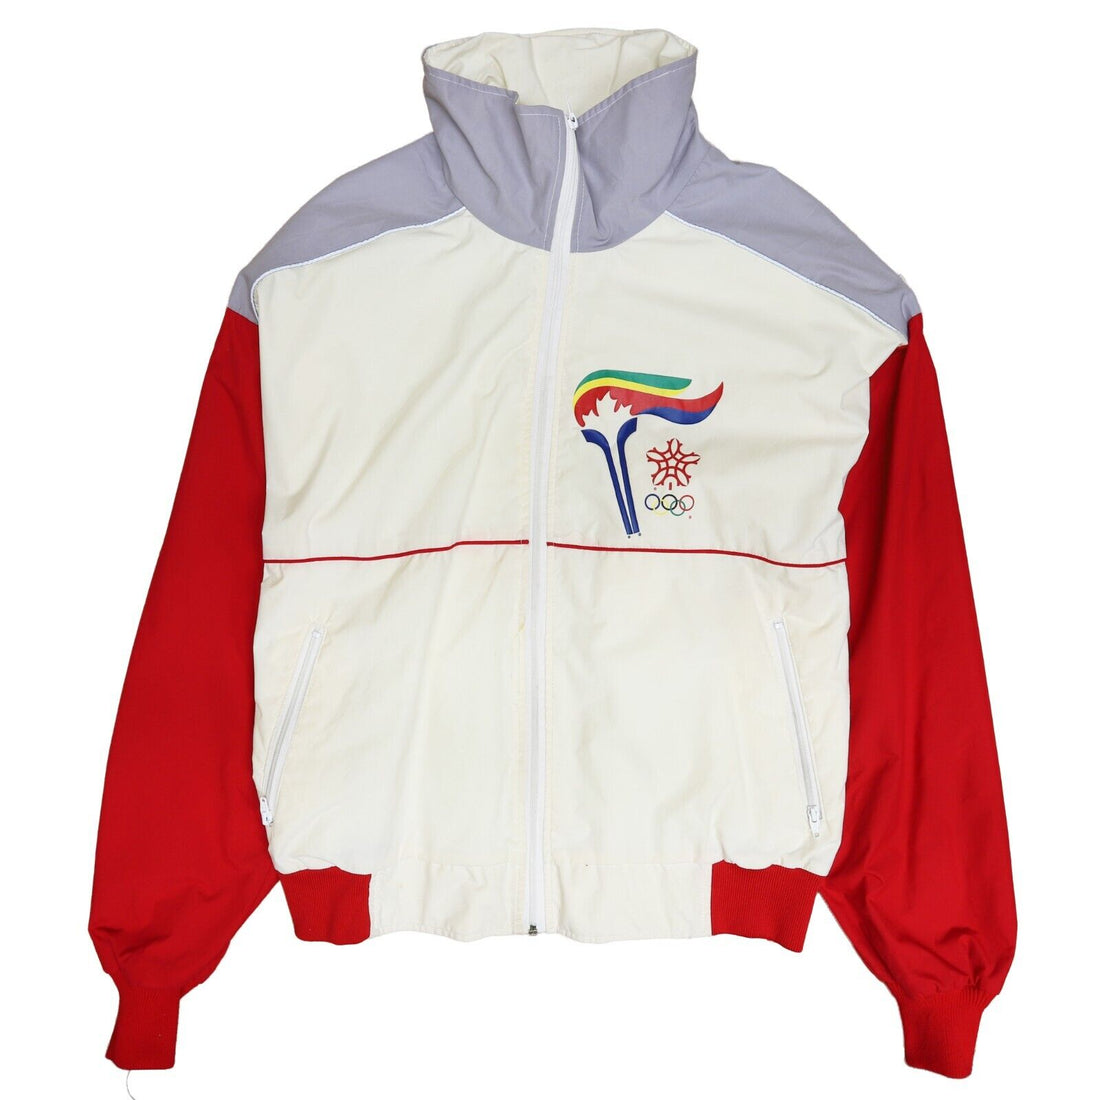 Vintage Canada Calgary Winter Olympics Windbreaker Jacket XL Torch Runner 1988